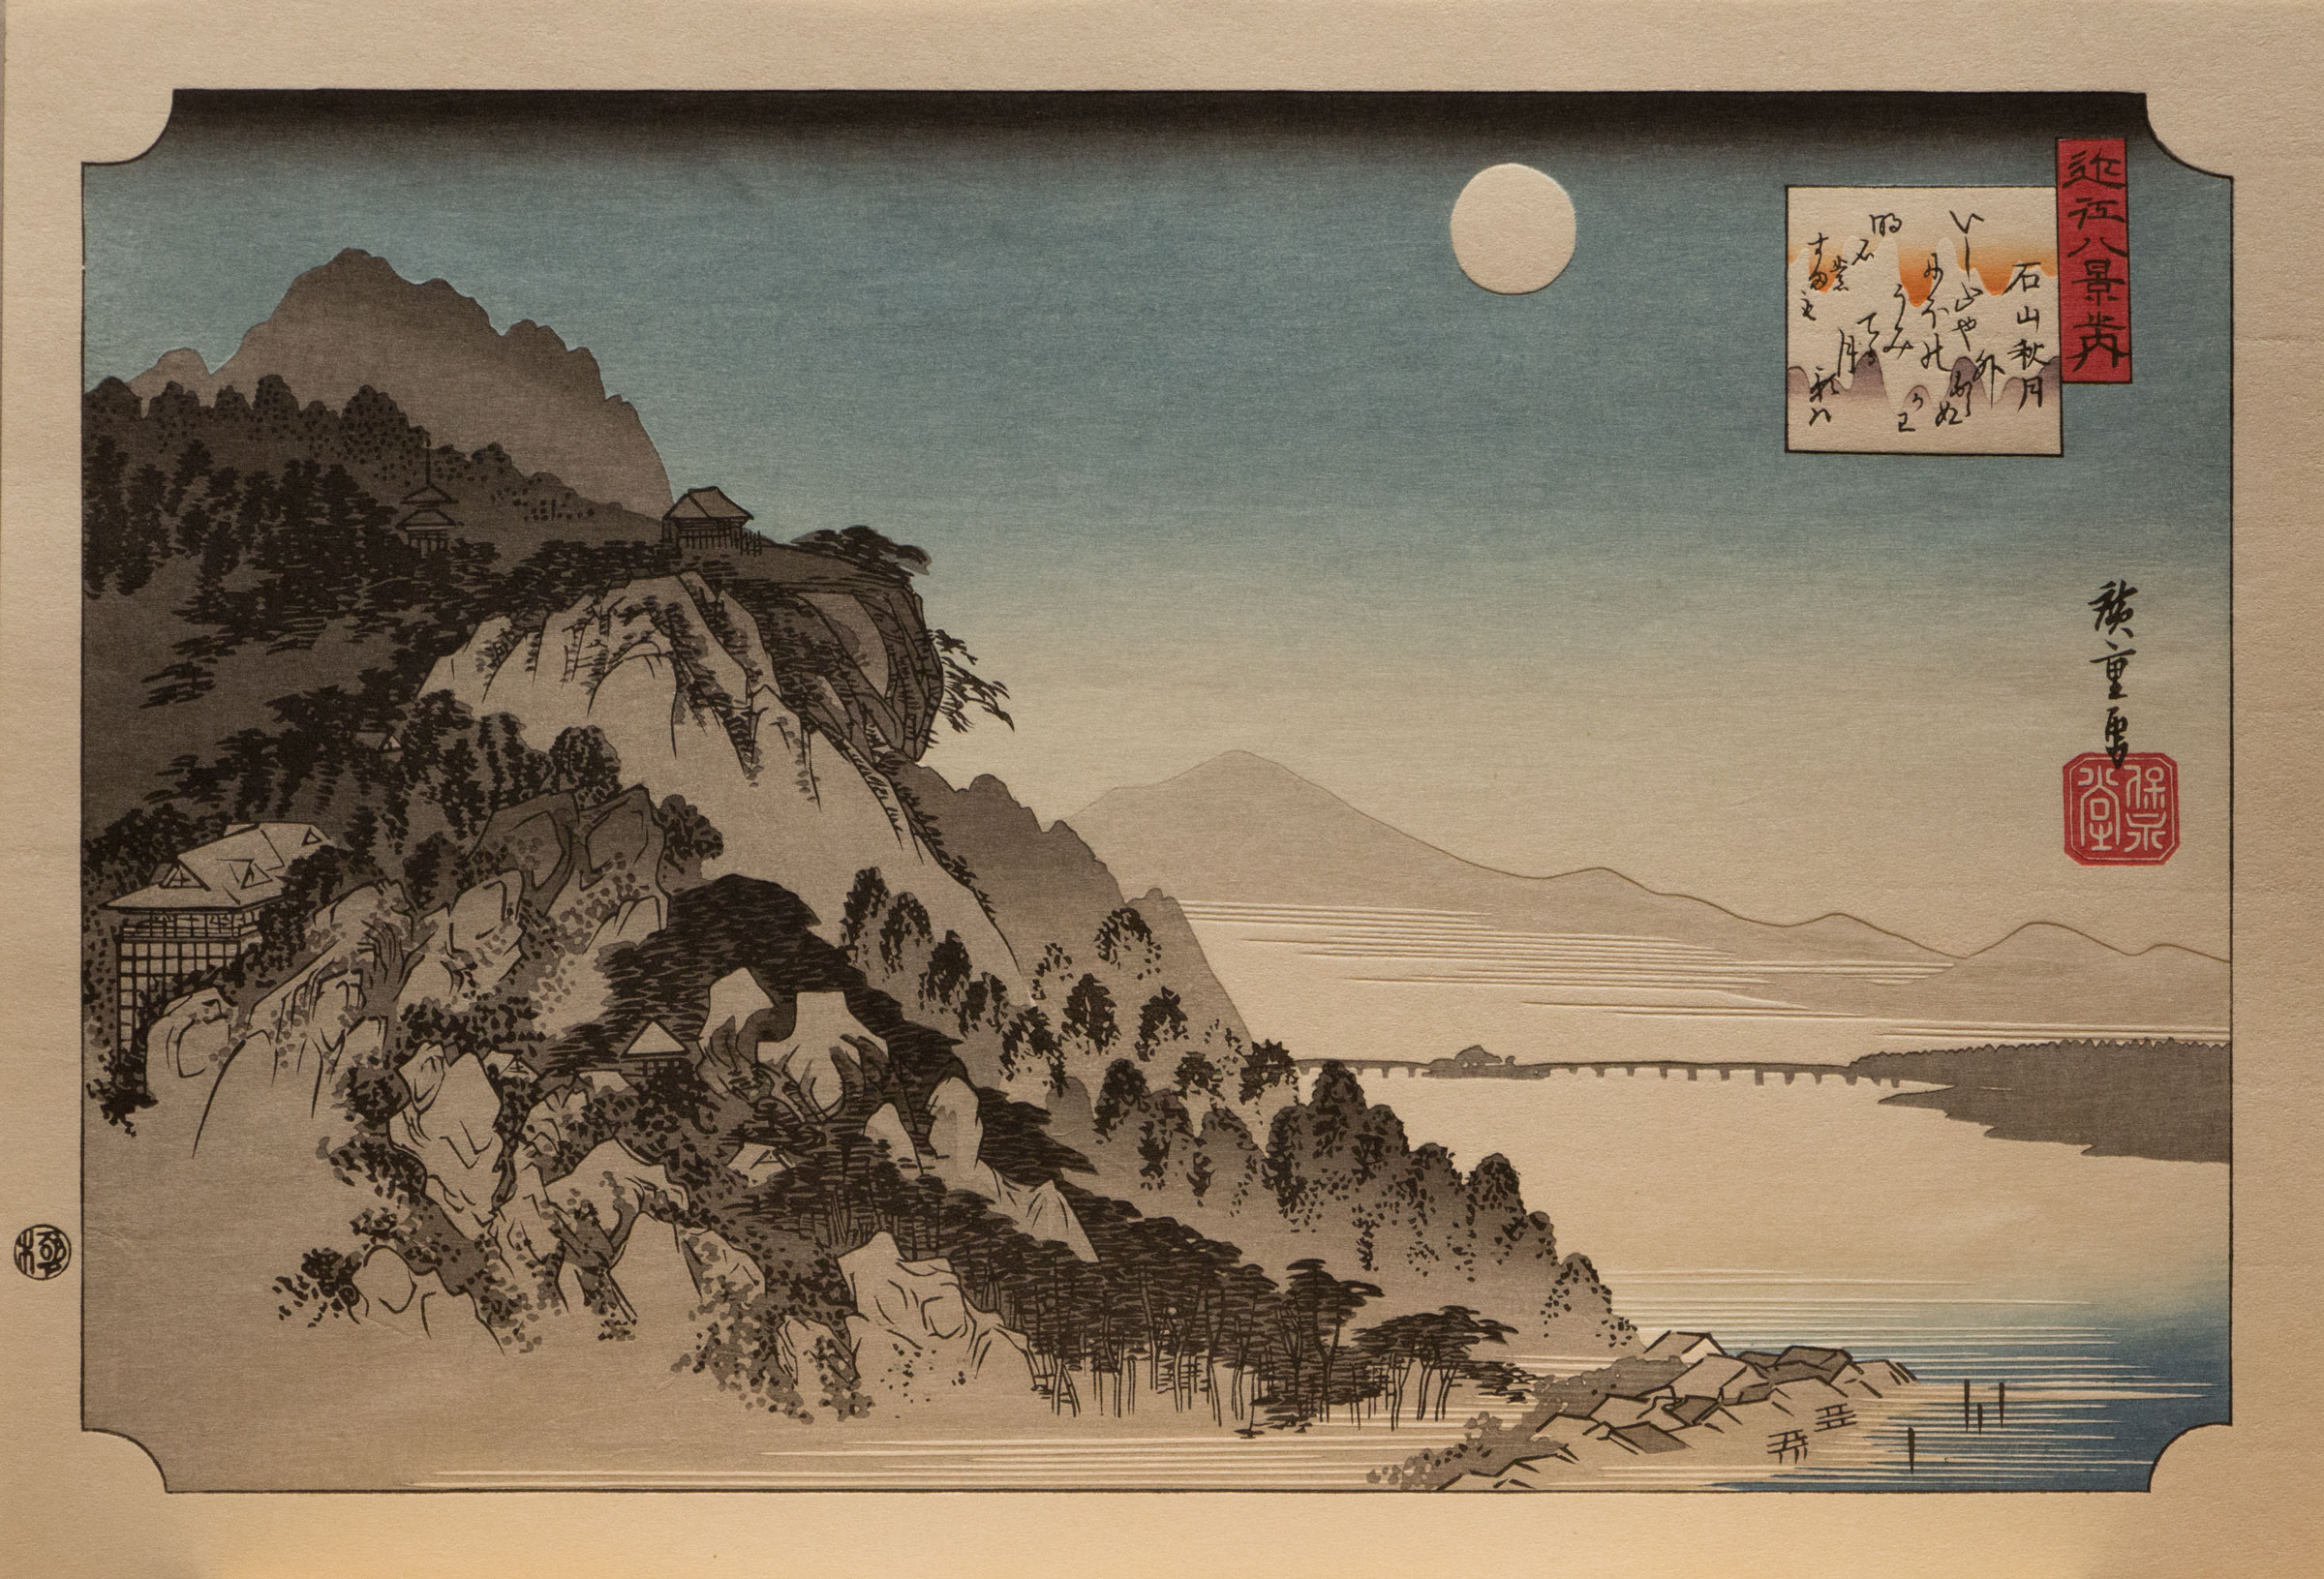 Utagawa Hiroshige Woodblock Print Japanese Art Traditional Artwork Lake Mountains Moon Rocks Trees 2400x1631